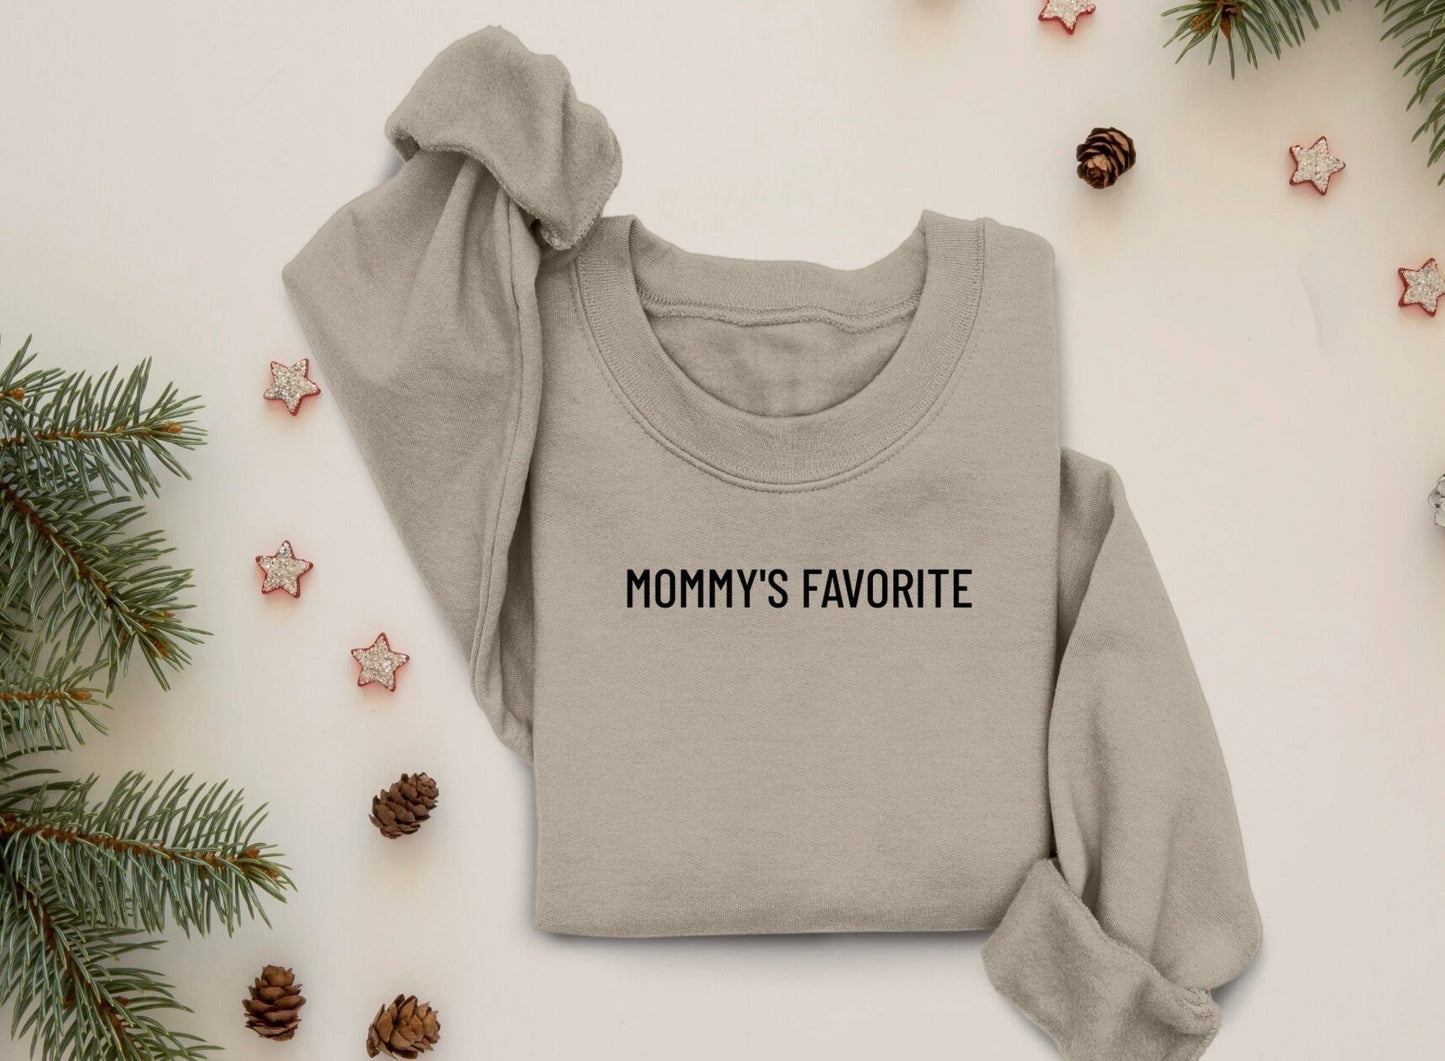 Mommy’s Favorite Sweatshirt, Mommy’s Favorite Shirt, Mommy’s Favorite Crewneck, Mommys Favorite Sweater, Oversized Sweater, Comfy Sweatshirt